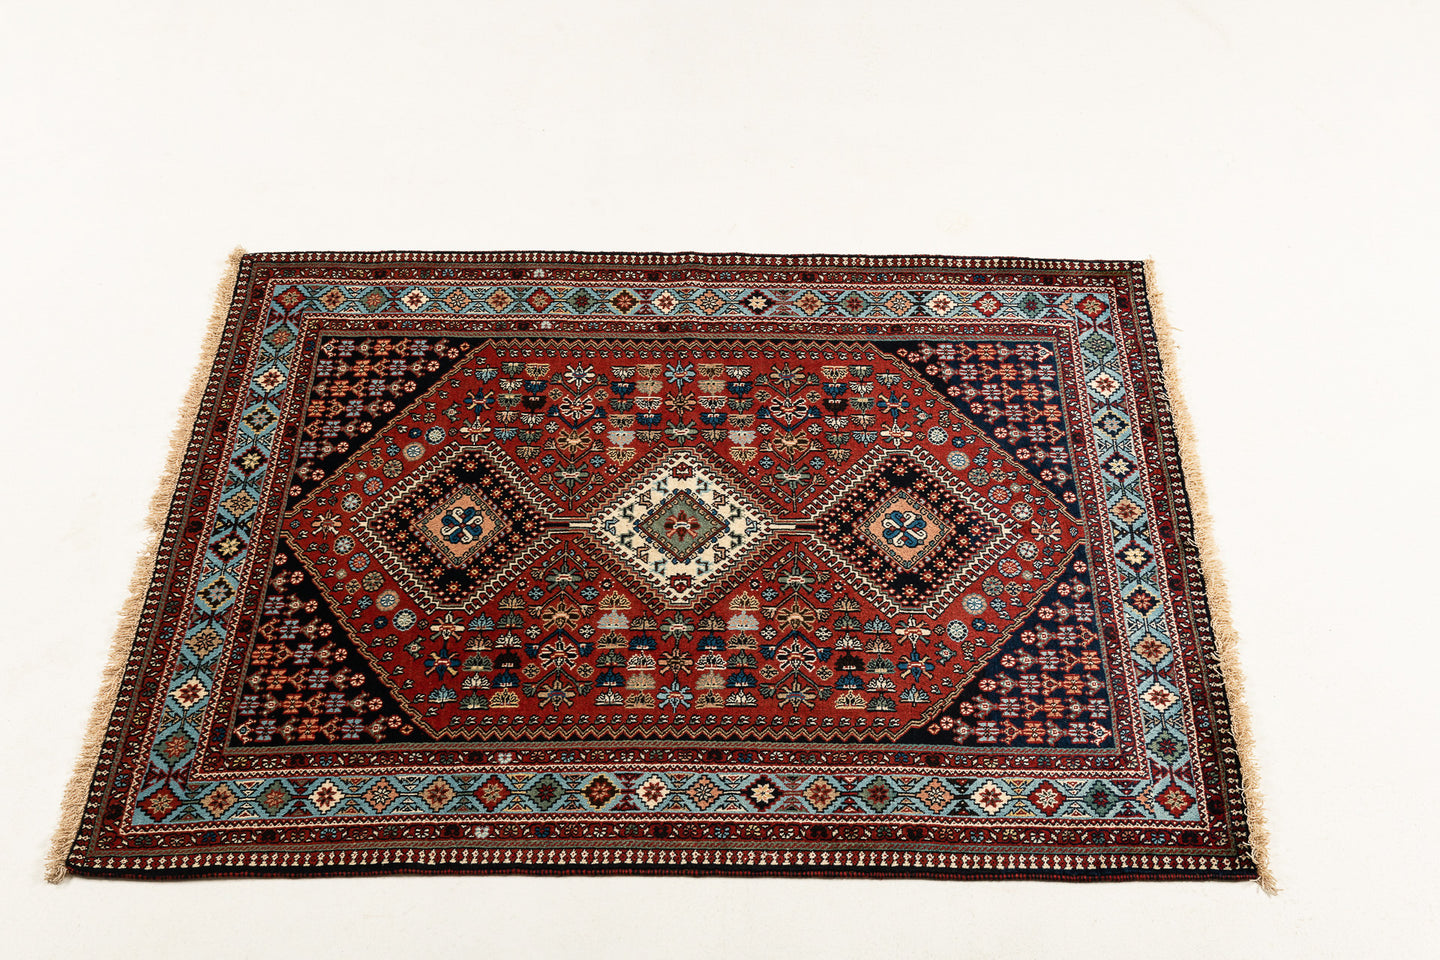 Authentic original hand knotted carpet 190x145 CM